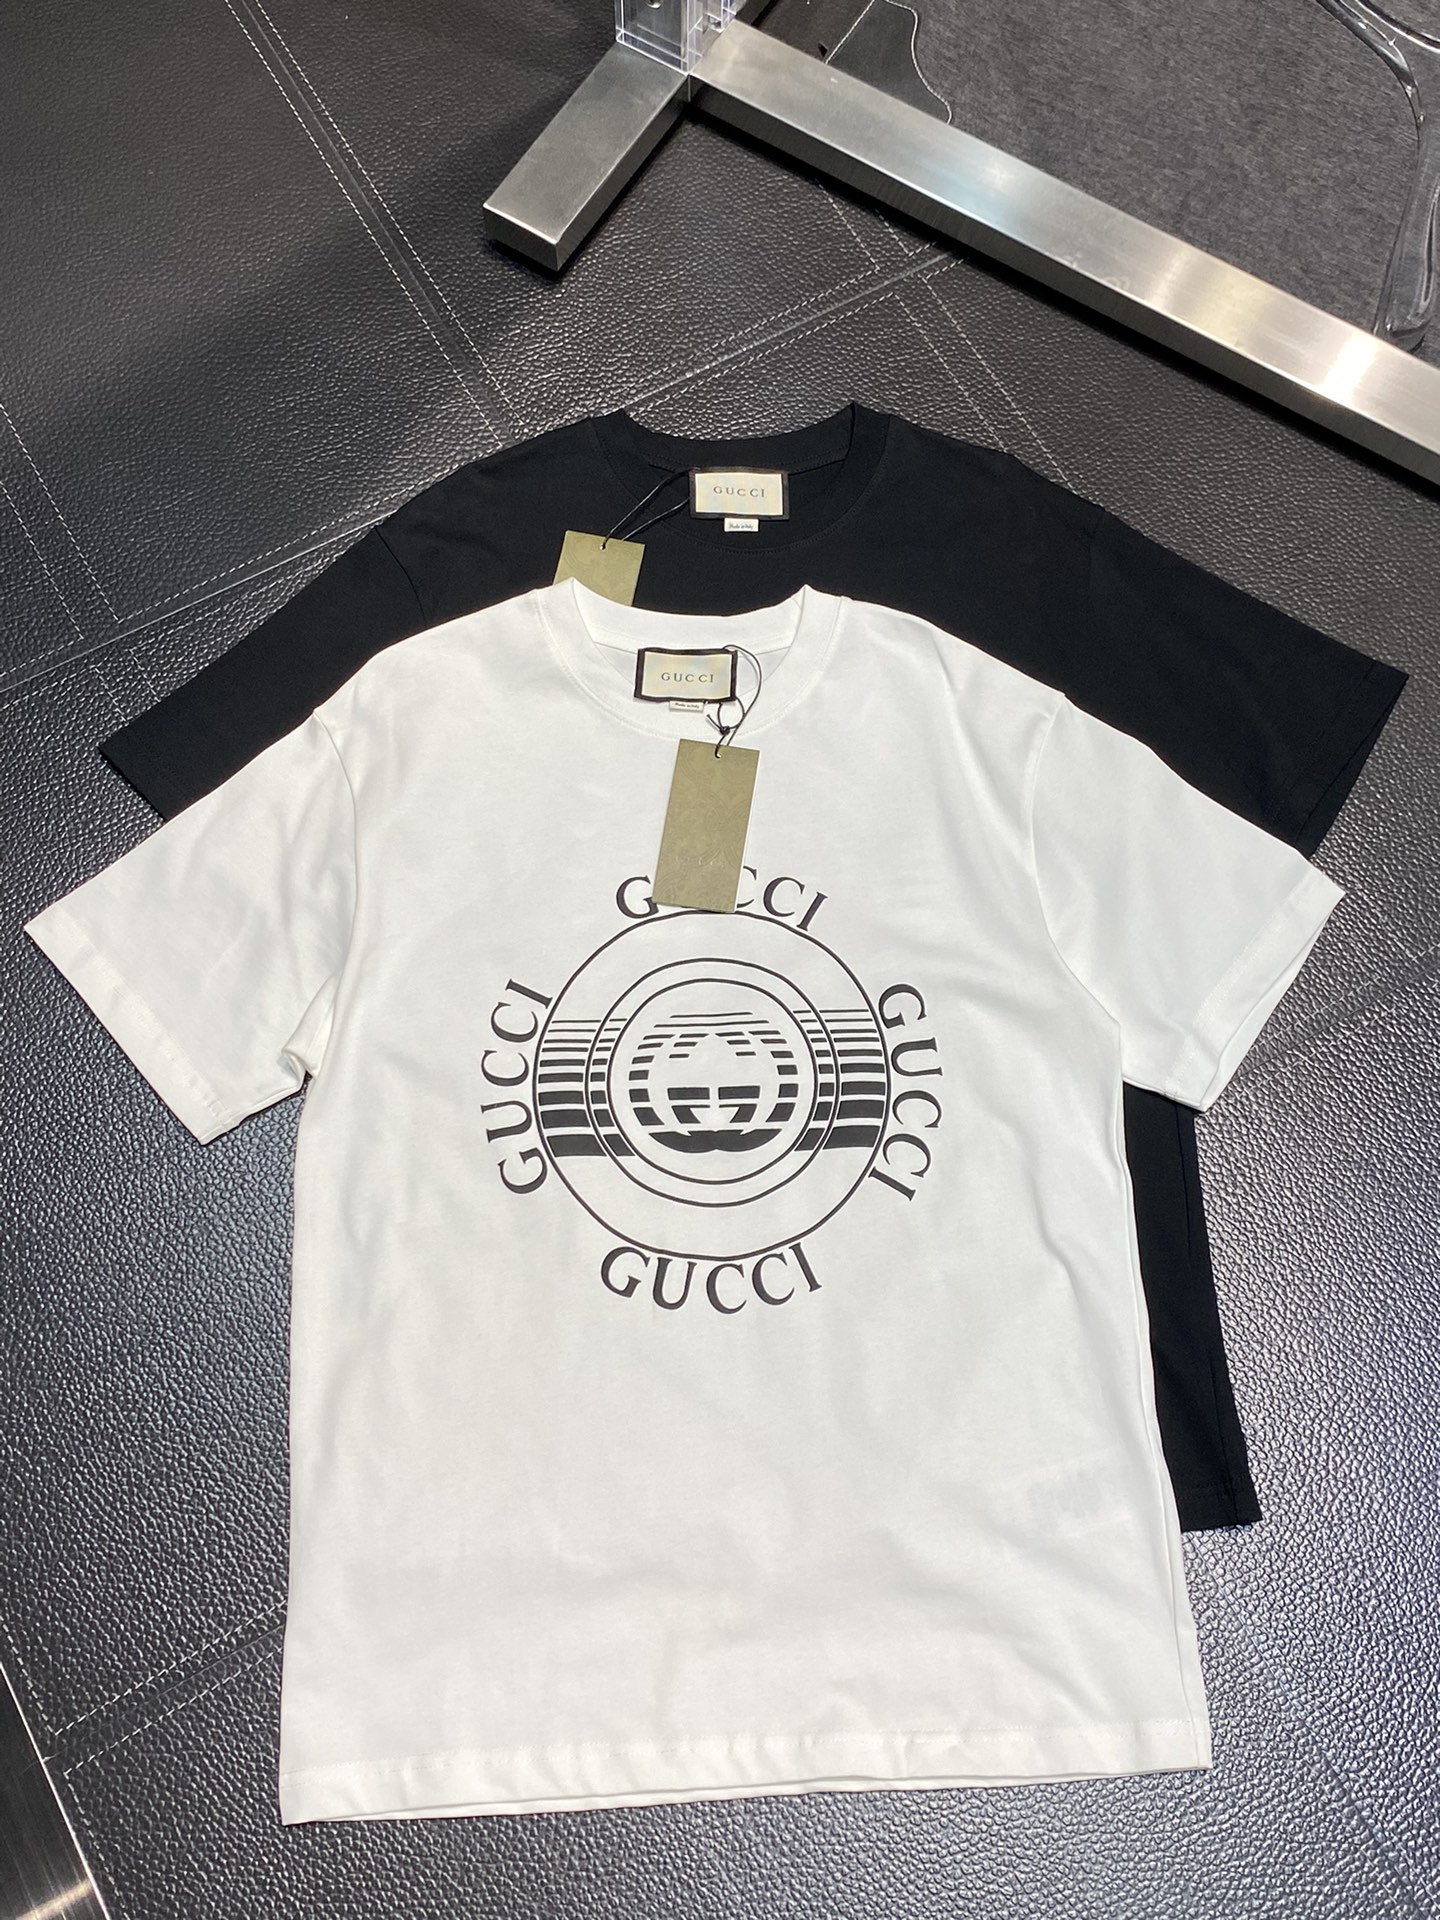 Gucci Clothing T-Shirt Wholesale Designer Shop
 Men Fashion Short Sleeve